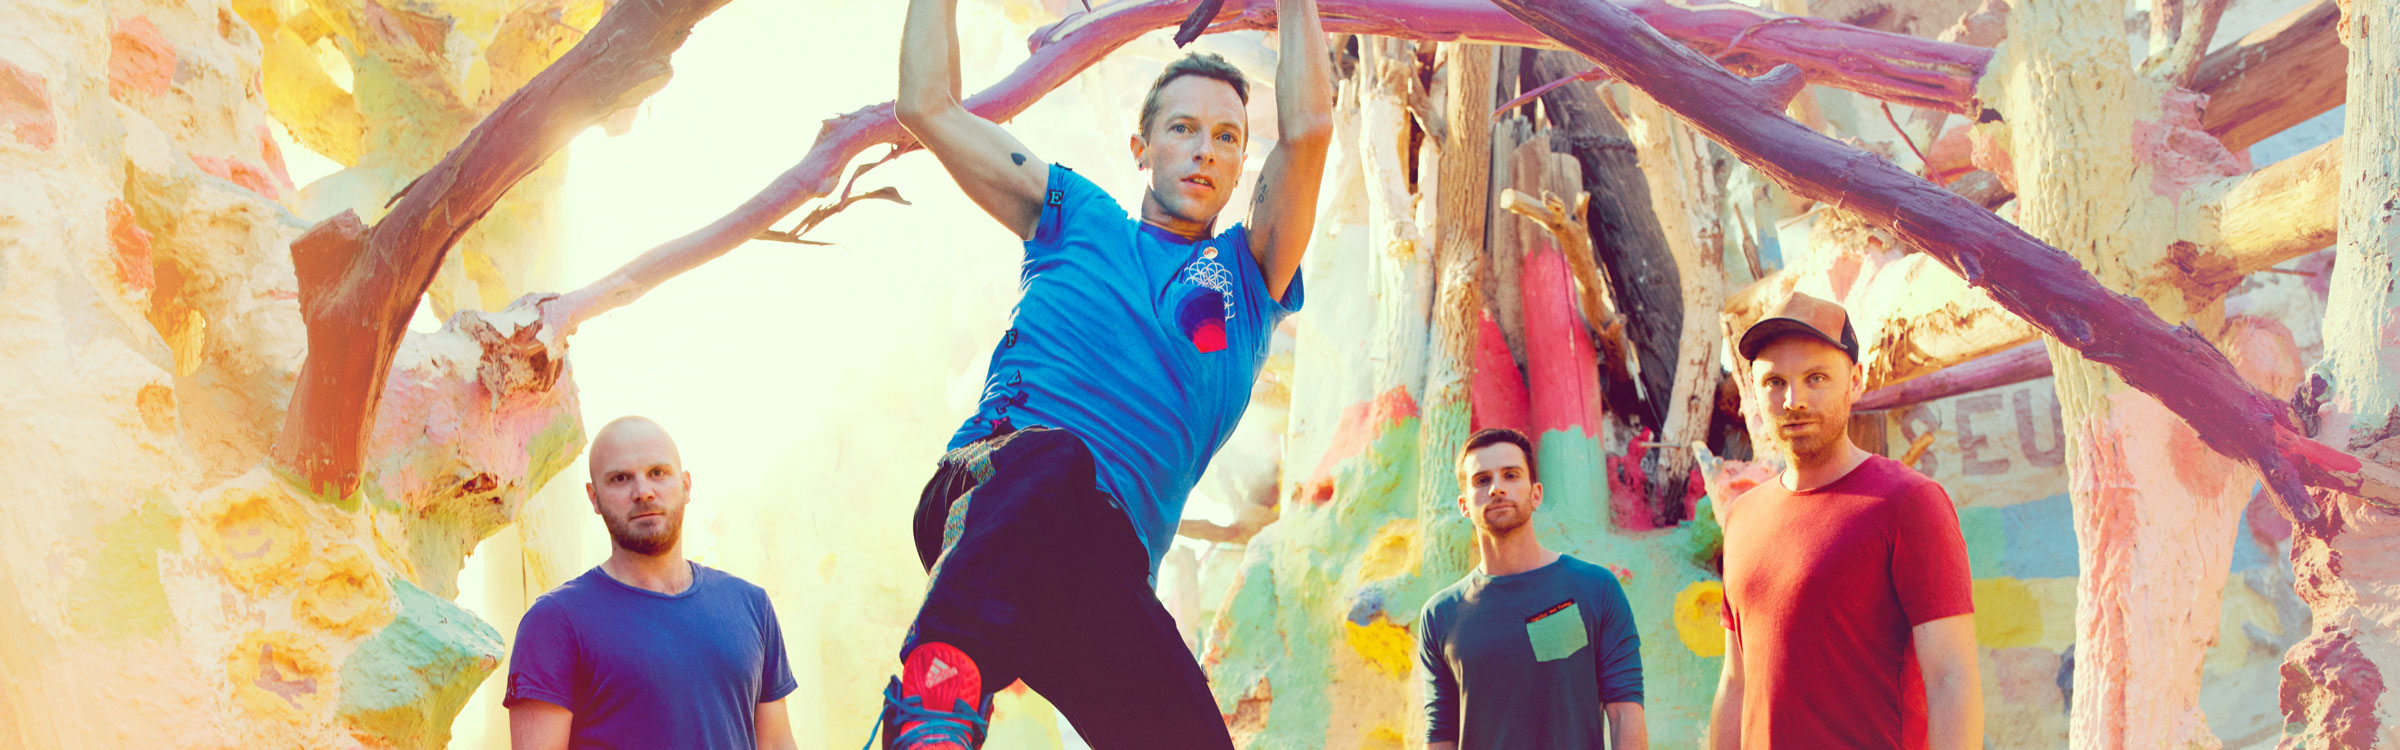 Coldplay header